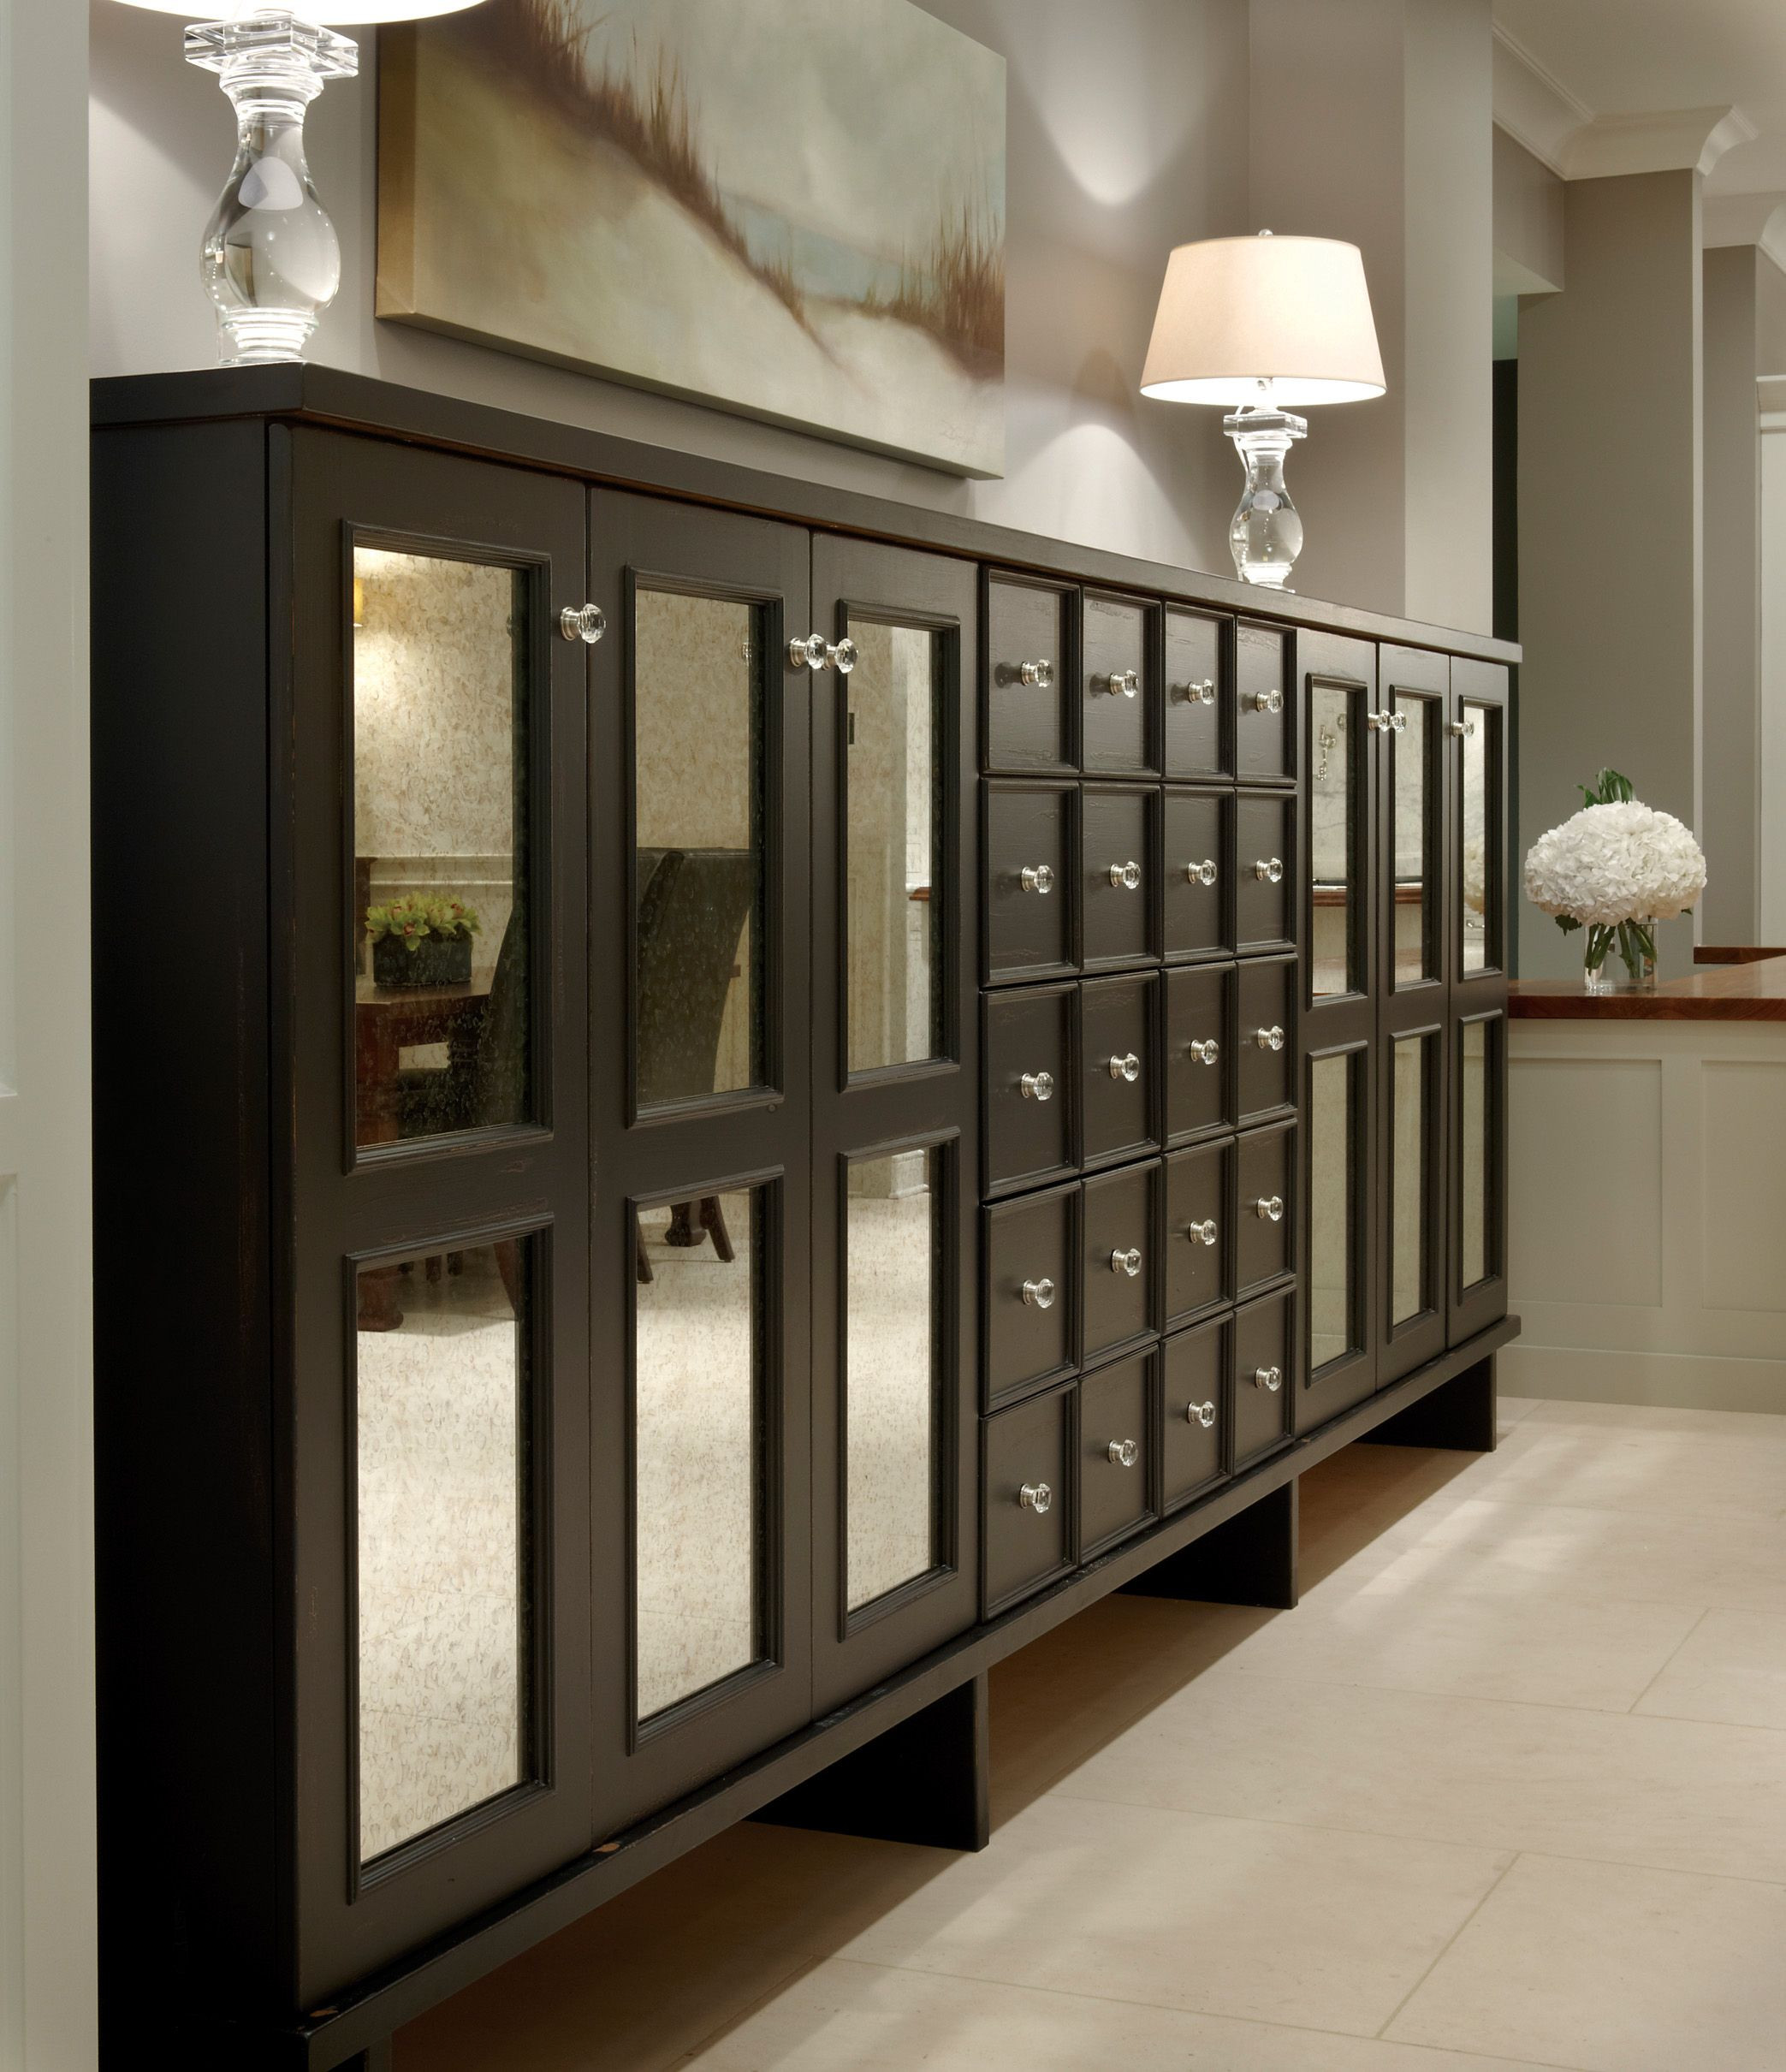 Built In Cabinet Designs Bedroom
 Best 25 Bedroom cabinets ideas on Pinterest